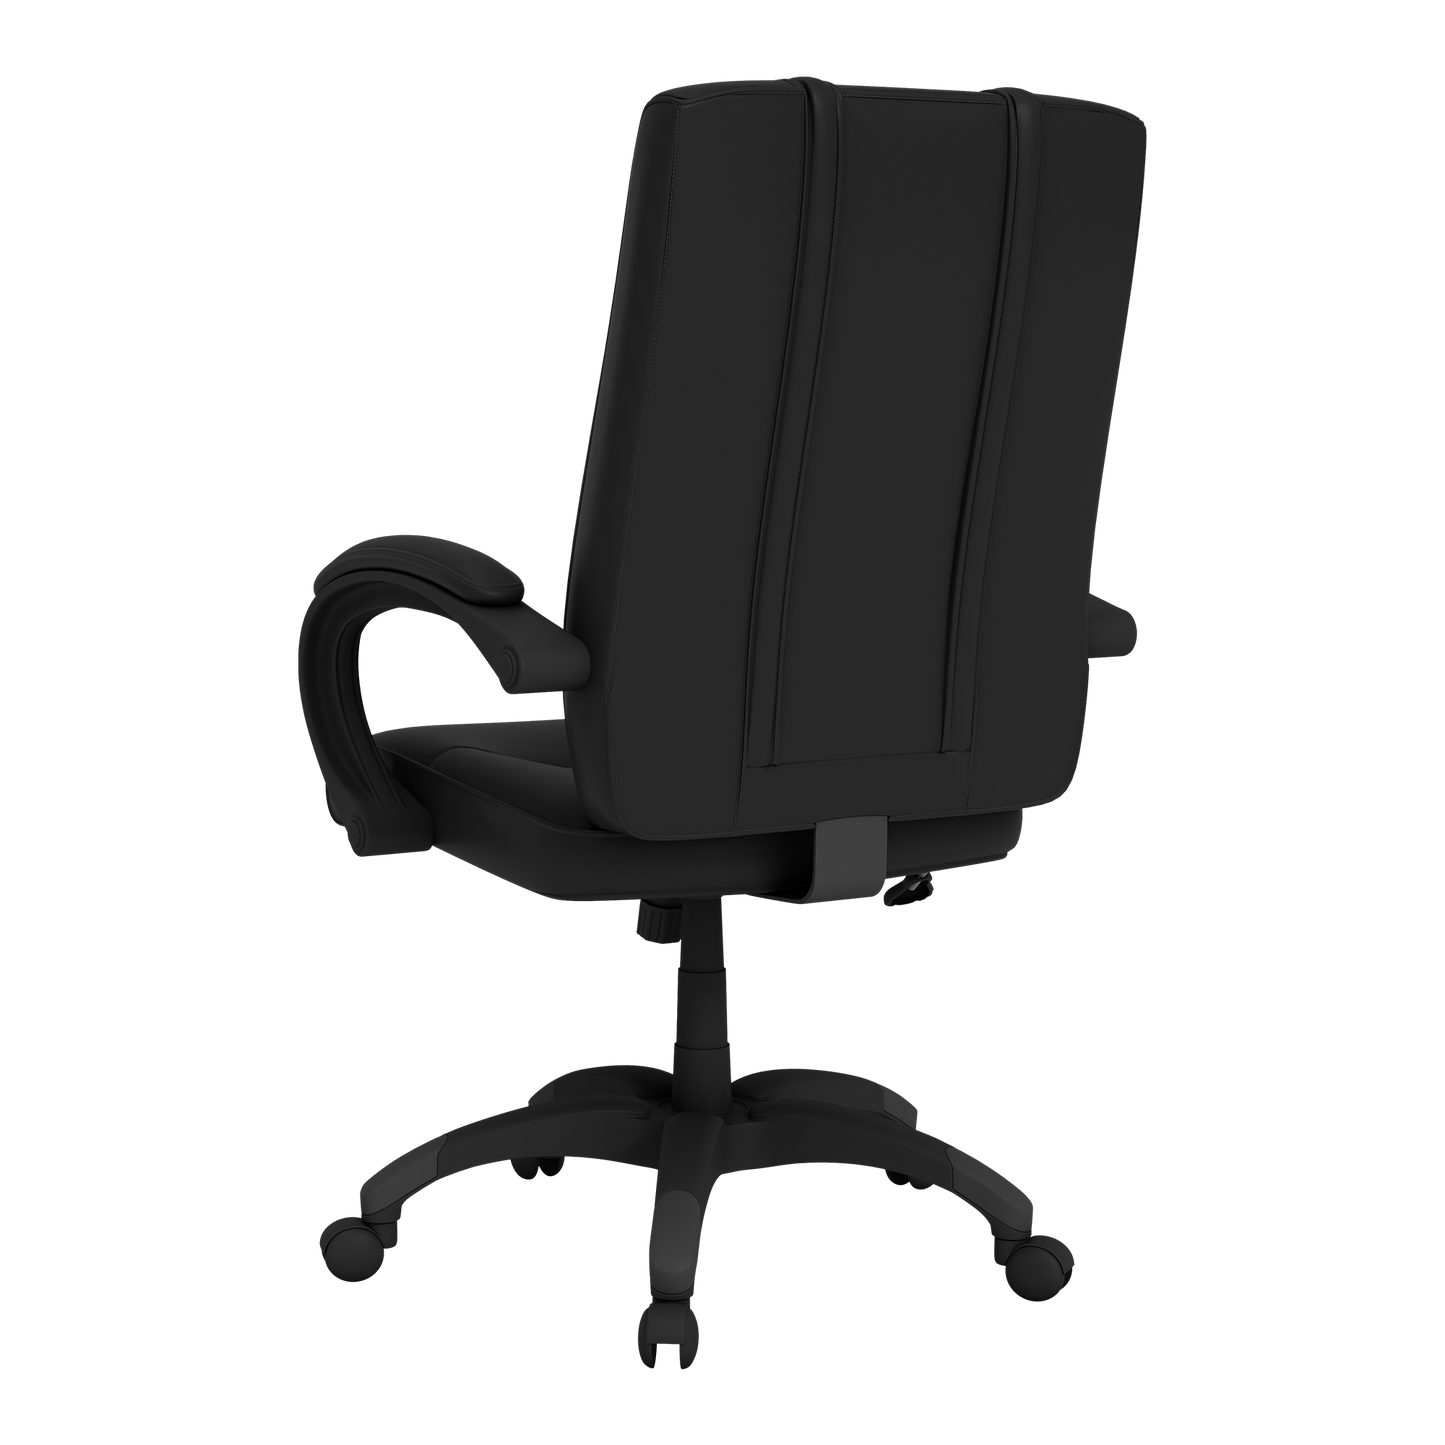 Office Chair 1000 with San Antonio Spurs Team Commemorative Logo